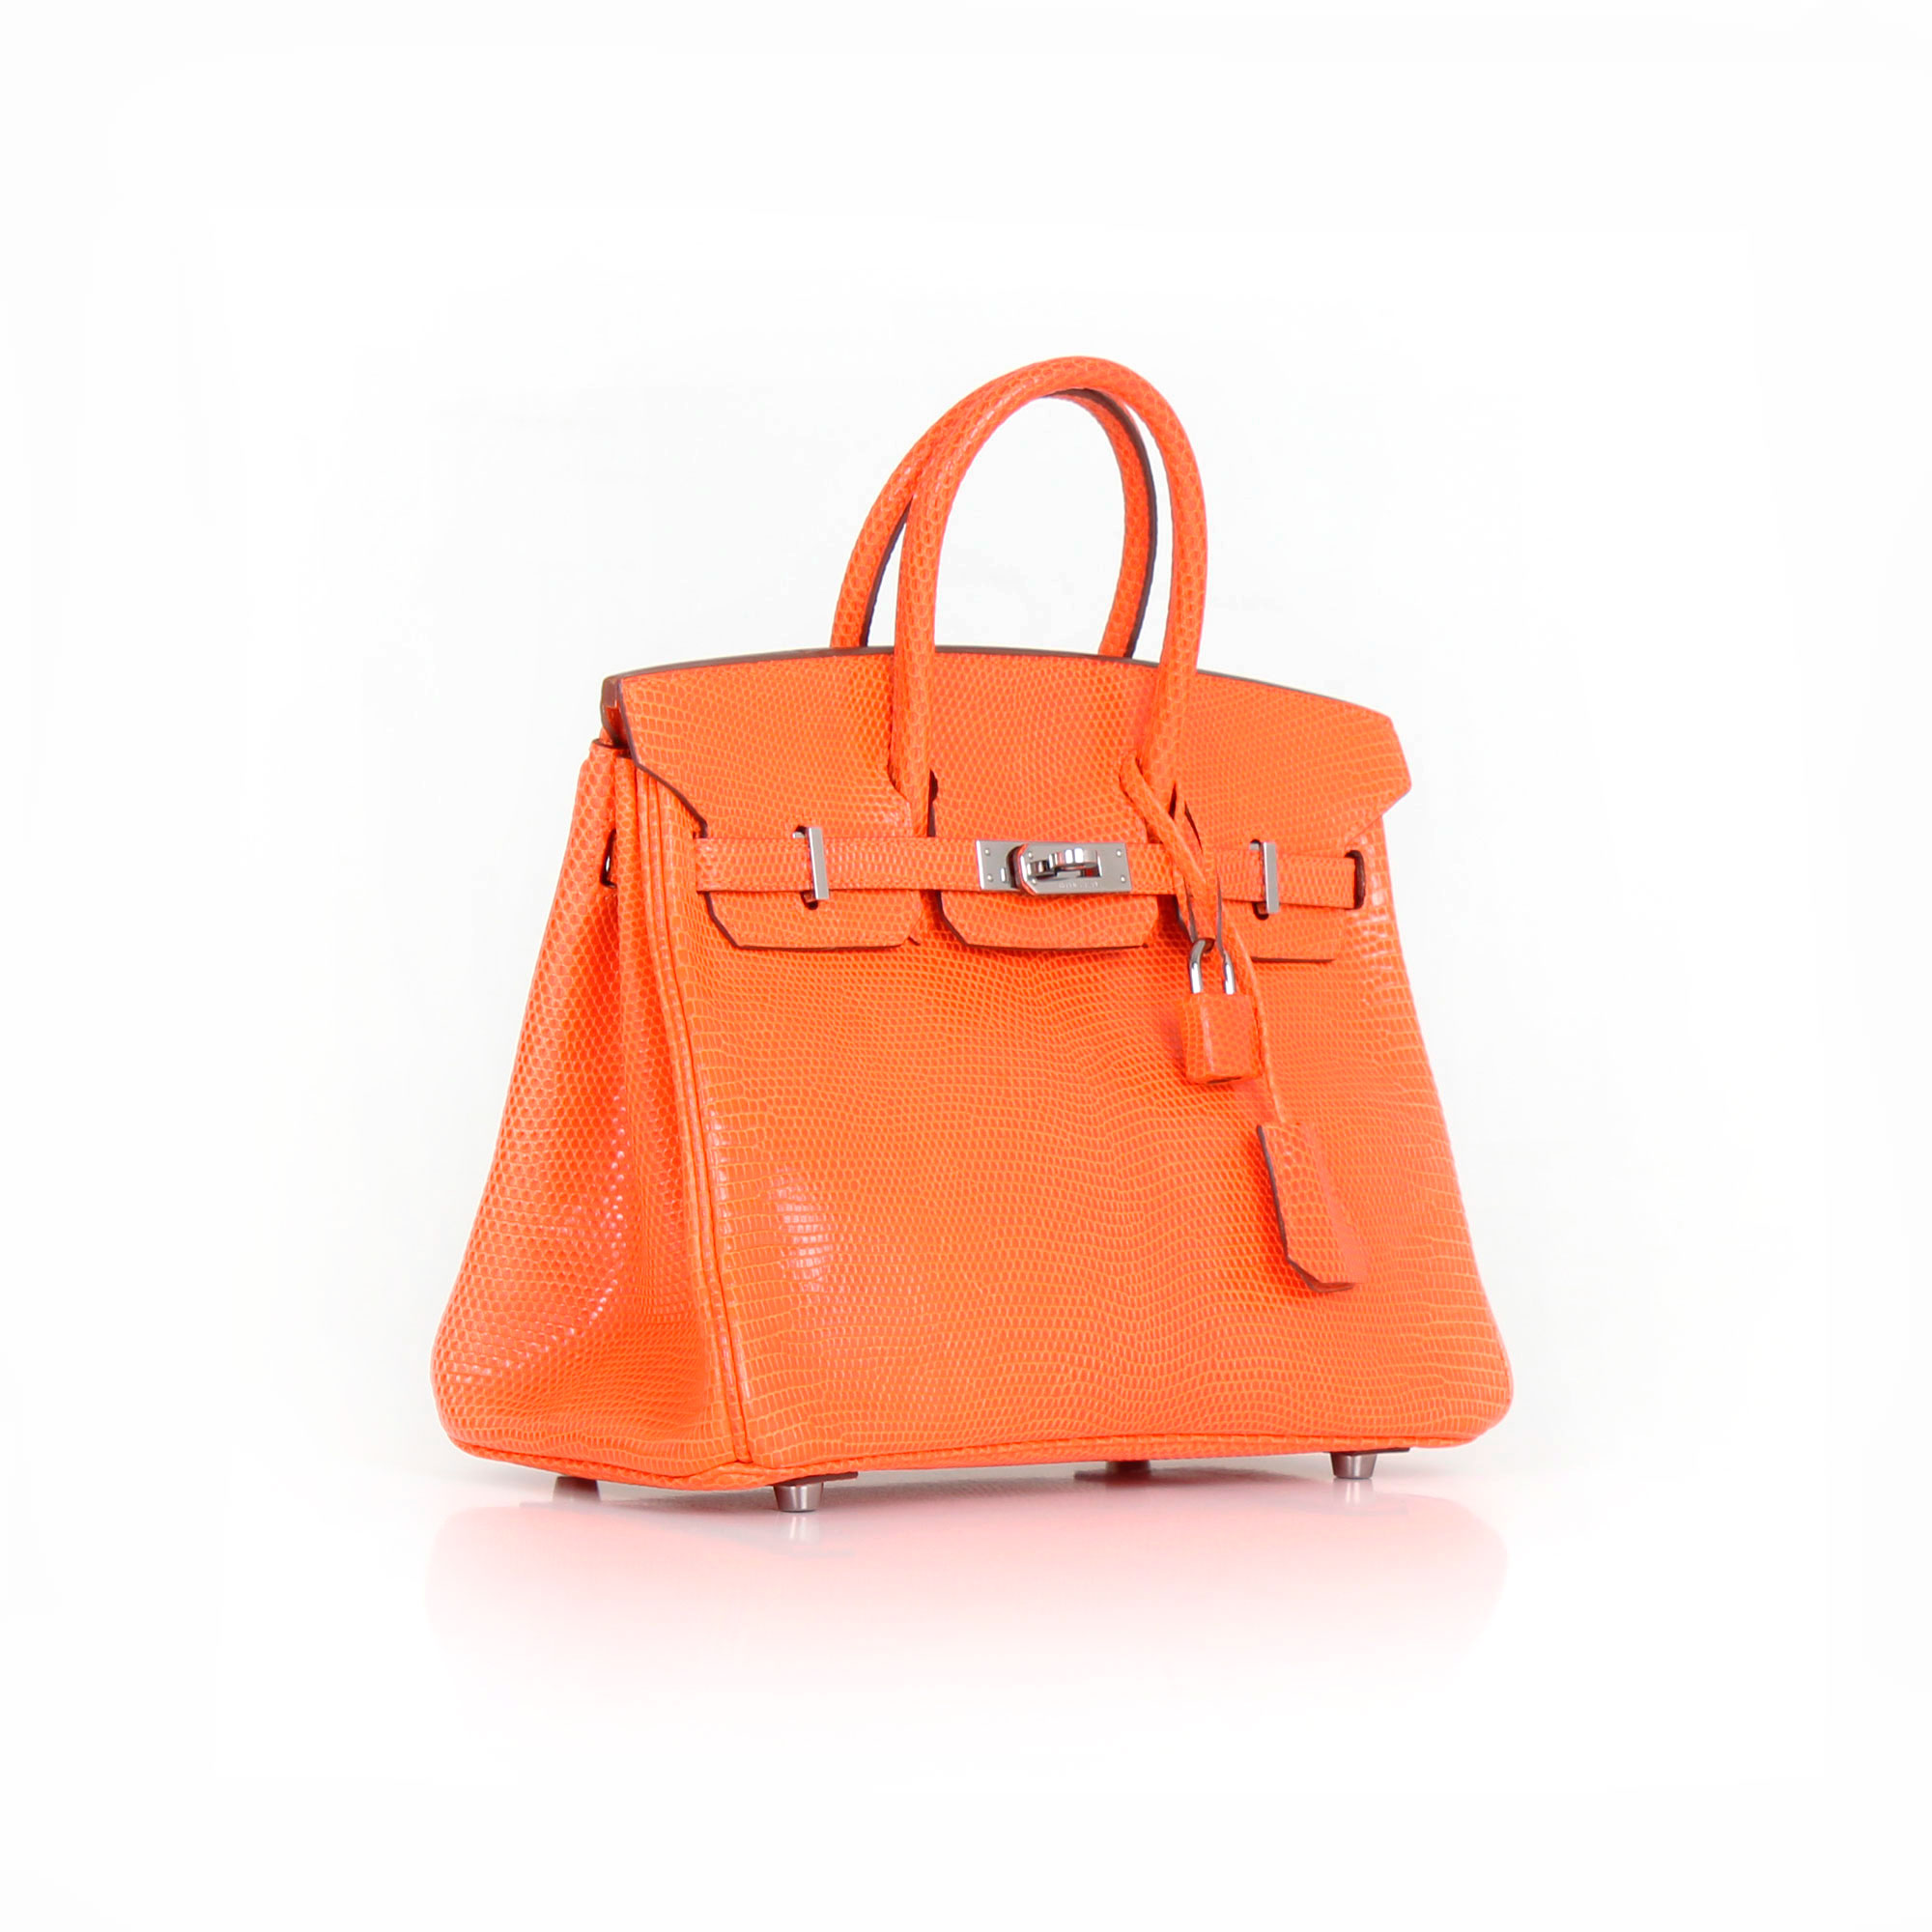 Bolso Hermès Birkin Piel de Lagarto Naranja | CBL BAGS